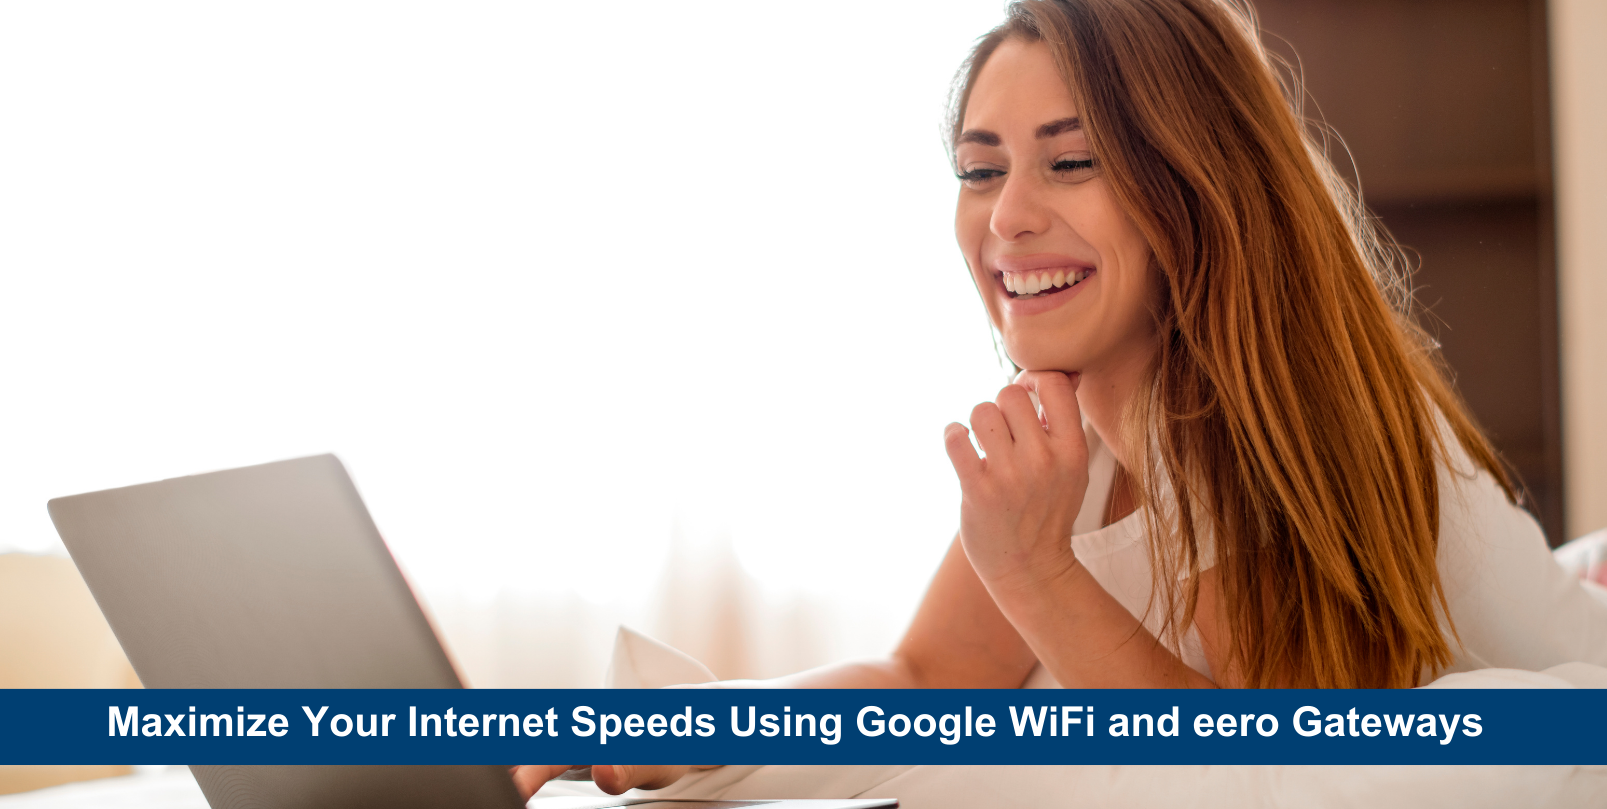 Maximizing your Internet with Google WiFi and eero gateways